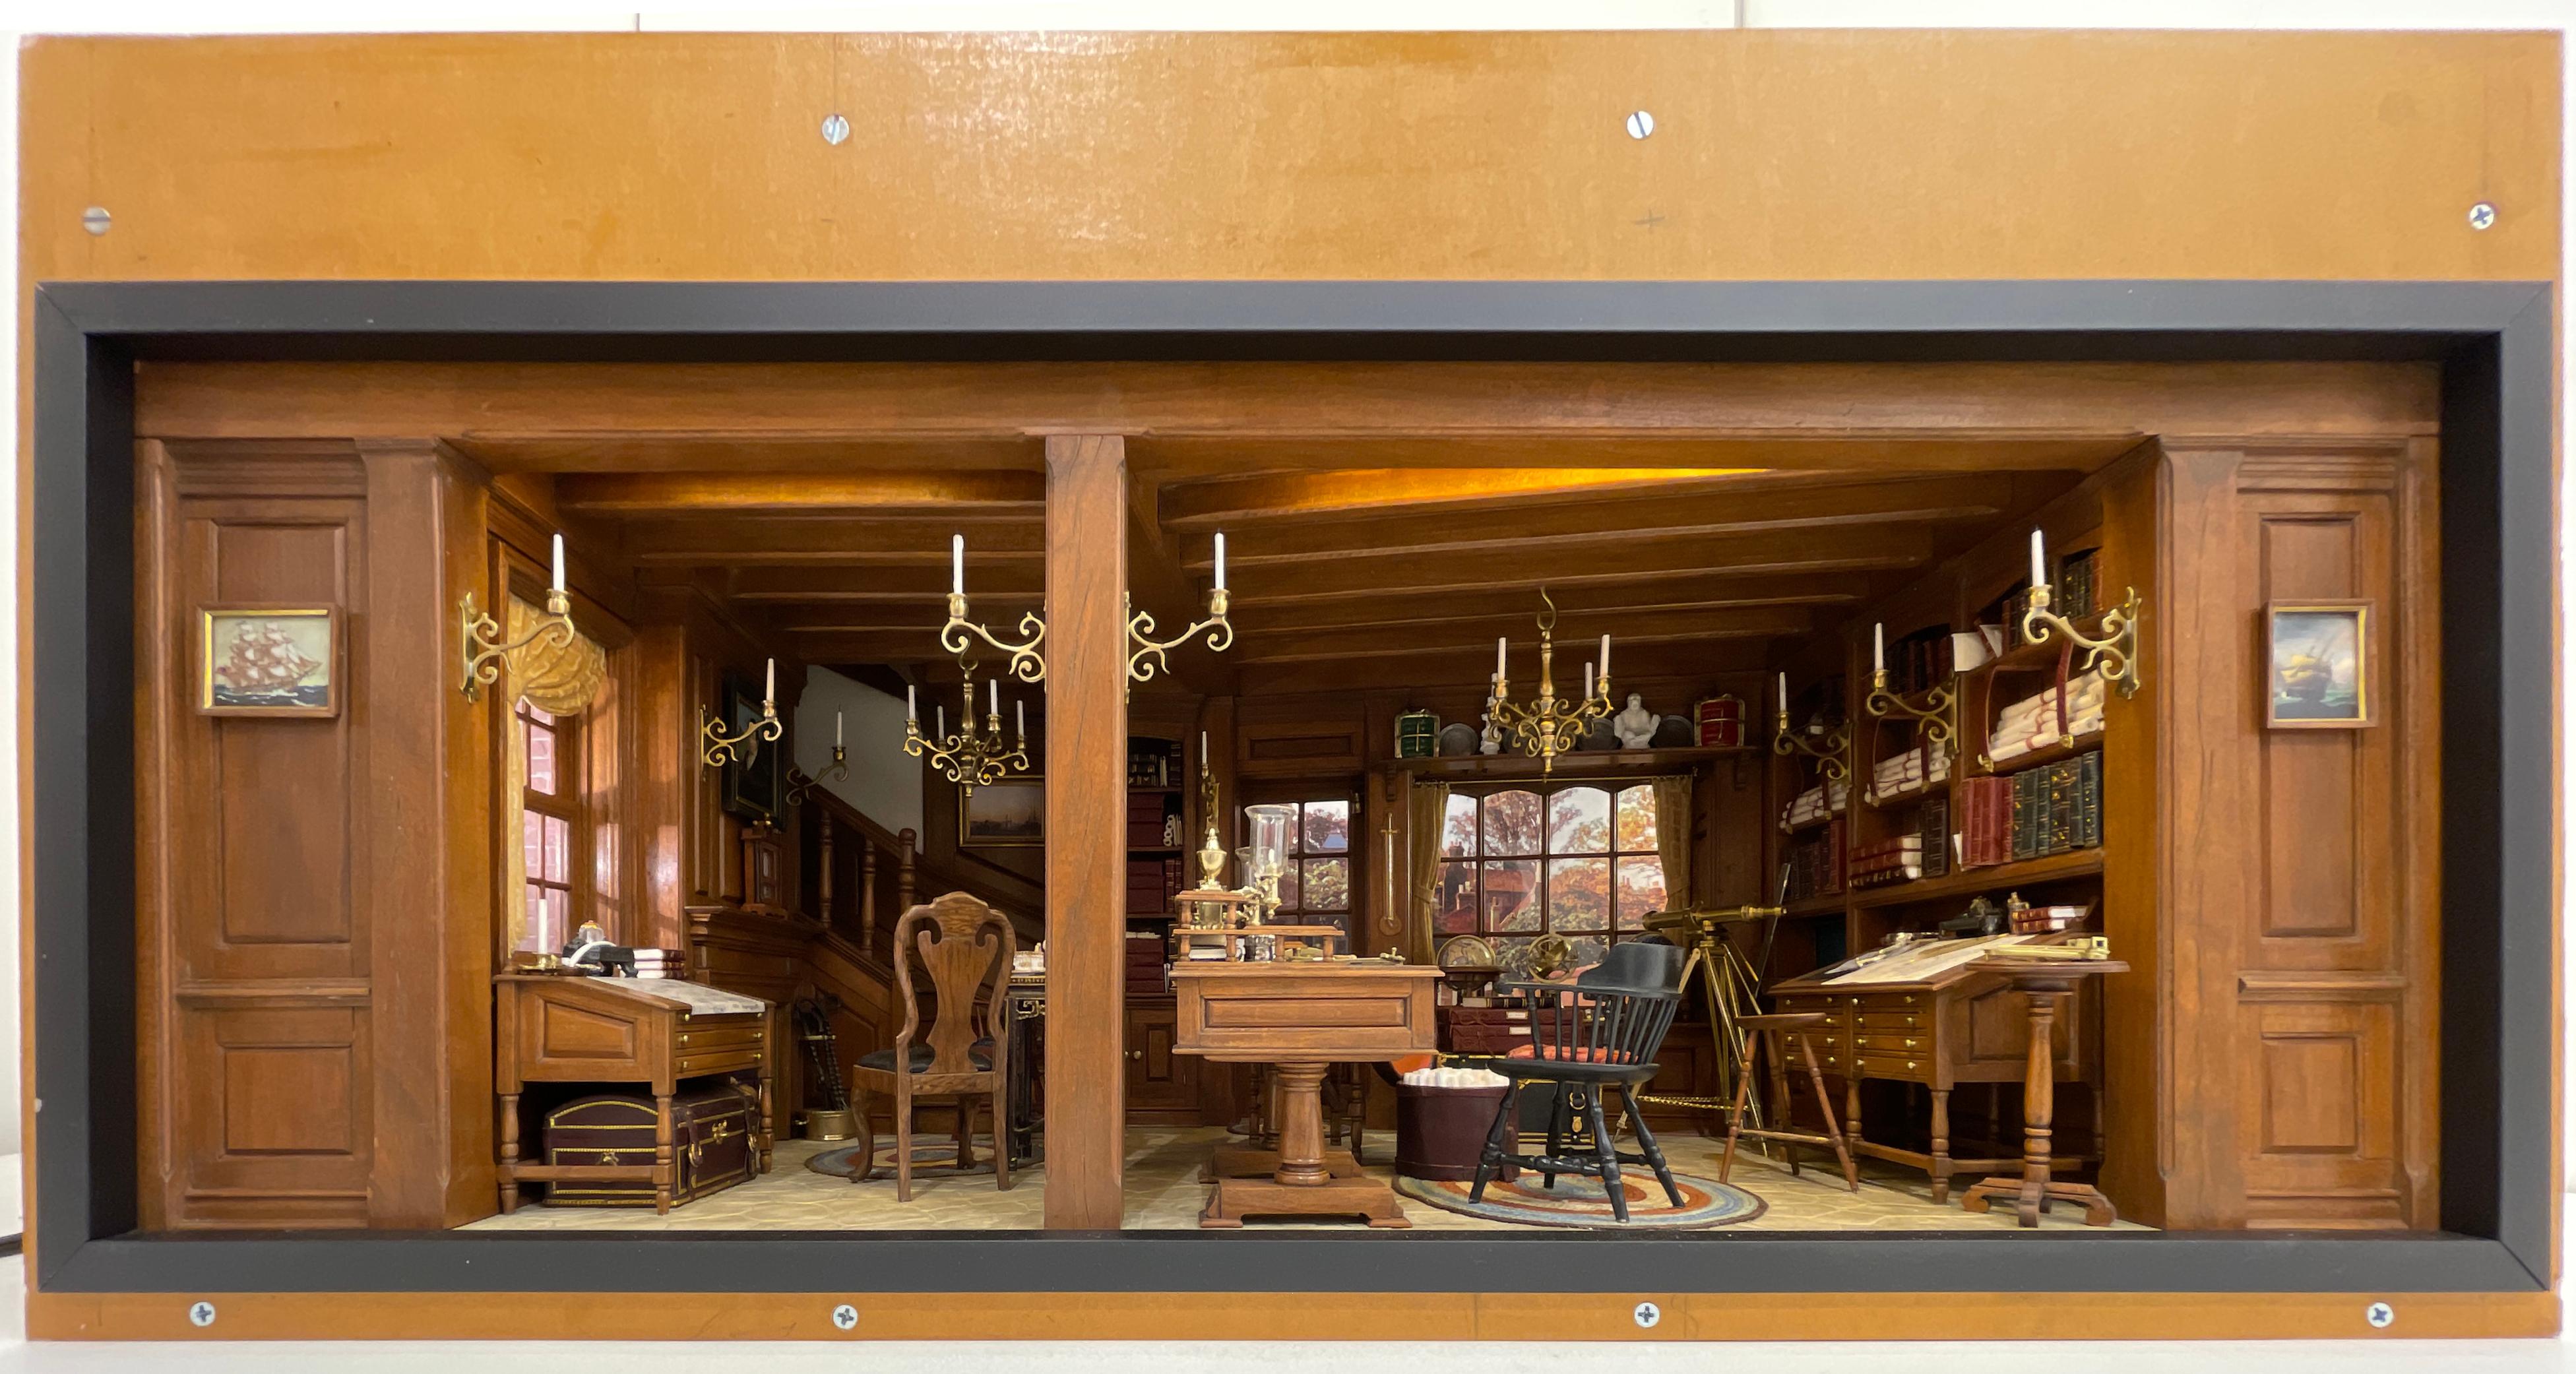 Büro eines Neuengland-Kartografen aus dem 18. Jahrhundert - Kupjack Studios Miniature Room im Angebot 8